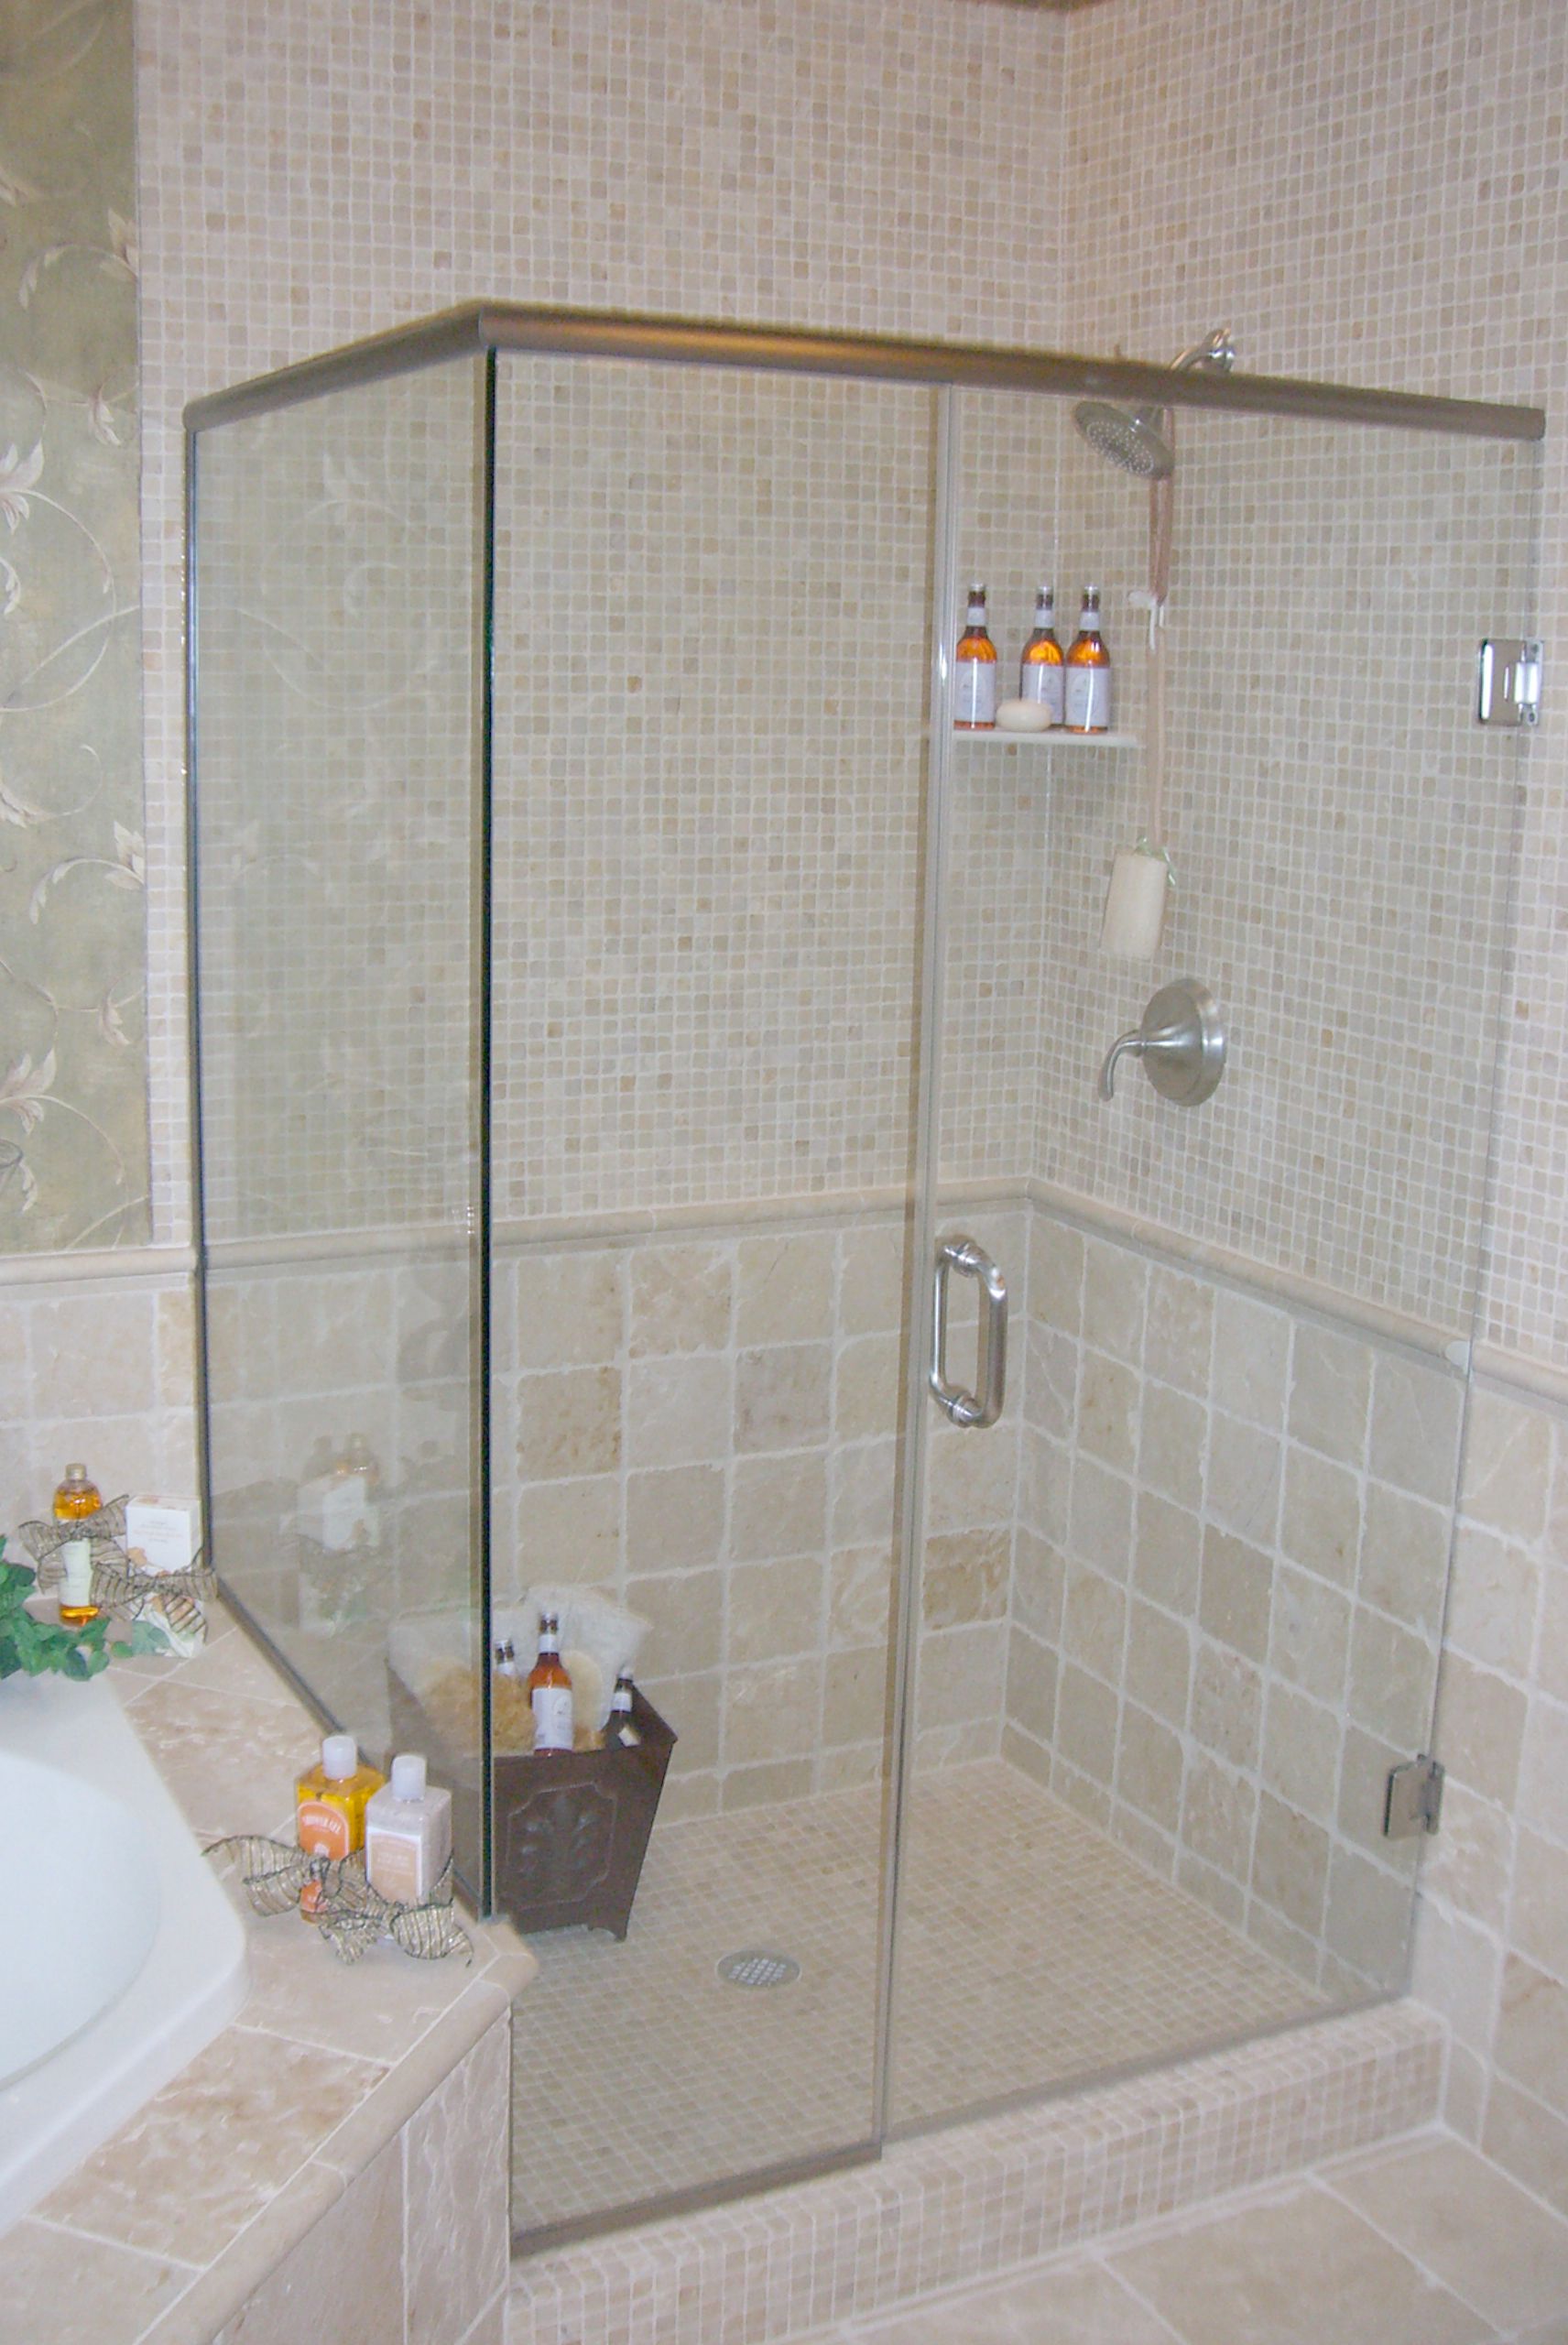 Shower Glass For Original Shower Glass Panel Suited For Shower Bath Design In Cream Bathroom Interior Concept Bathroom Shower Glass Panel For Contemporary Bathroom Styles